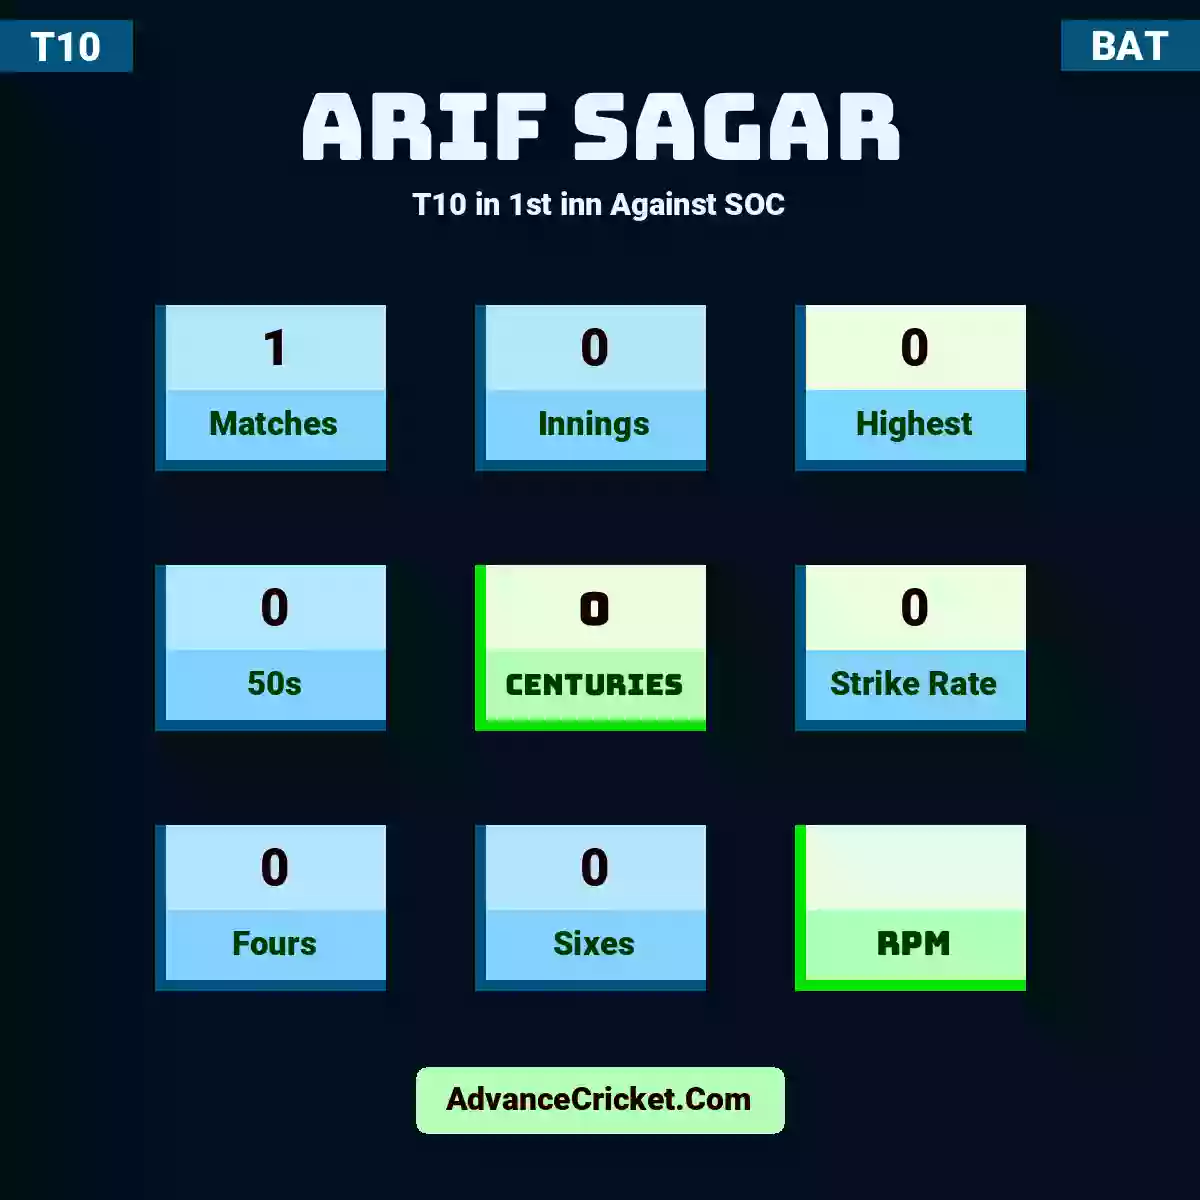 Arif Sagar T10  in 1st inn Against SOC, Arif Sagar played 1 matches, scored 0 runs as highest, 0 half-centuries, and 0 centuries, with a strike rate of 0. A.Sagar hit 0 fours and 0 sixes.